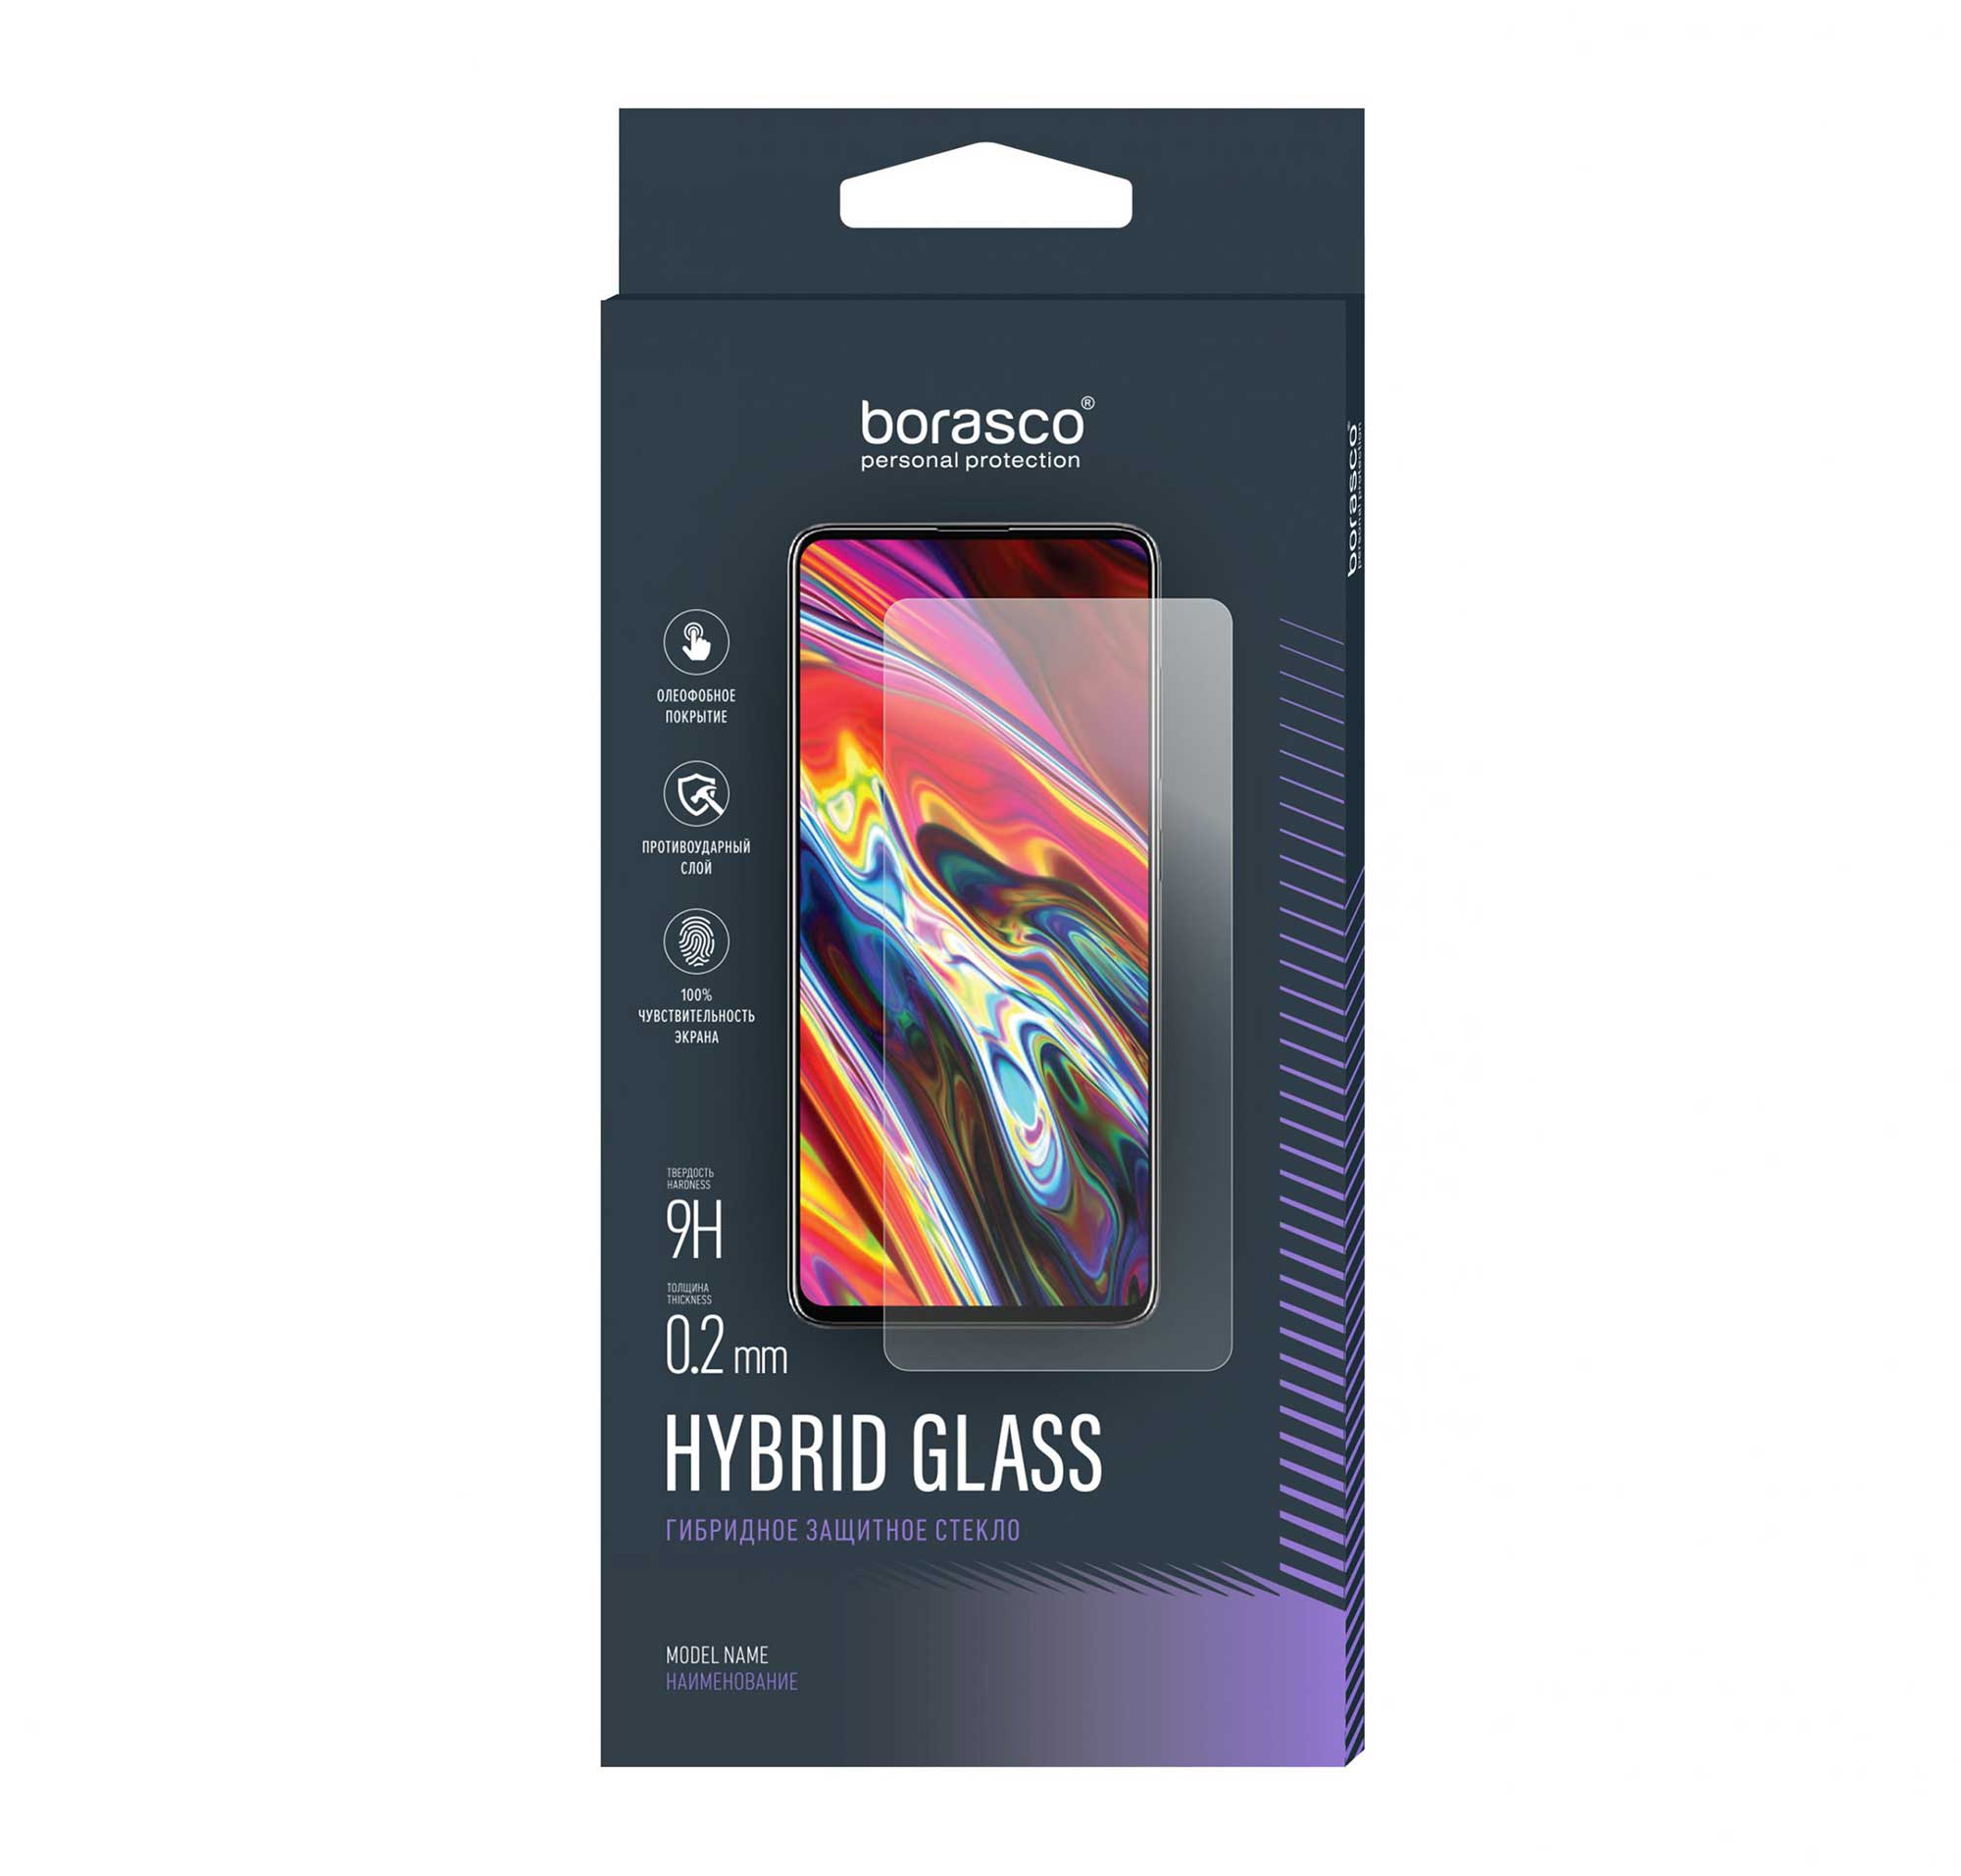 Защитное стекло BoraSCO Hybrid Glass для Nintendo Switch Lite 3 шт закаленное стекло 9h hd защитная пленка для экрана для nintendo switch ns защита экрана для nintendo switch lite аксессуары